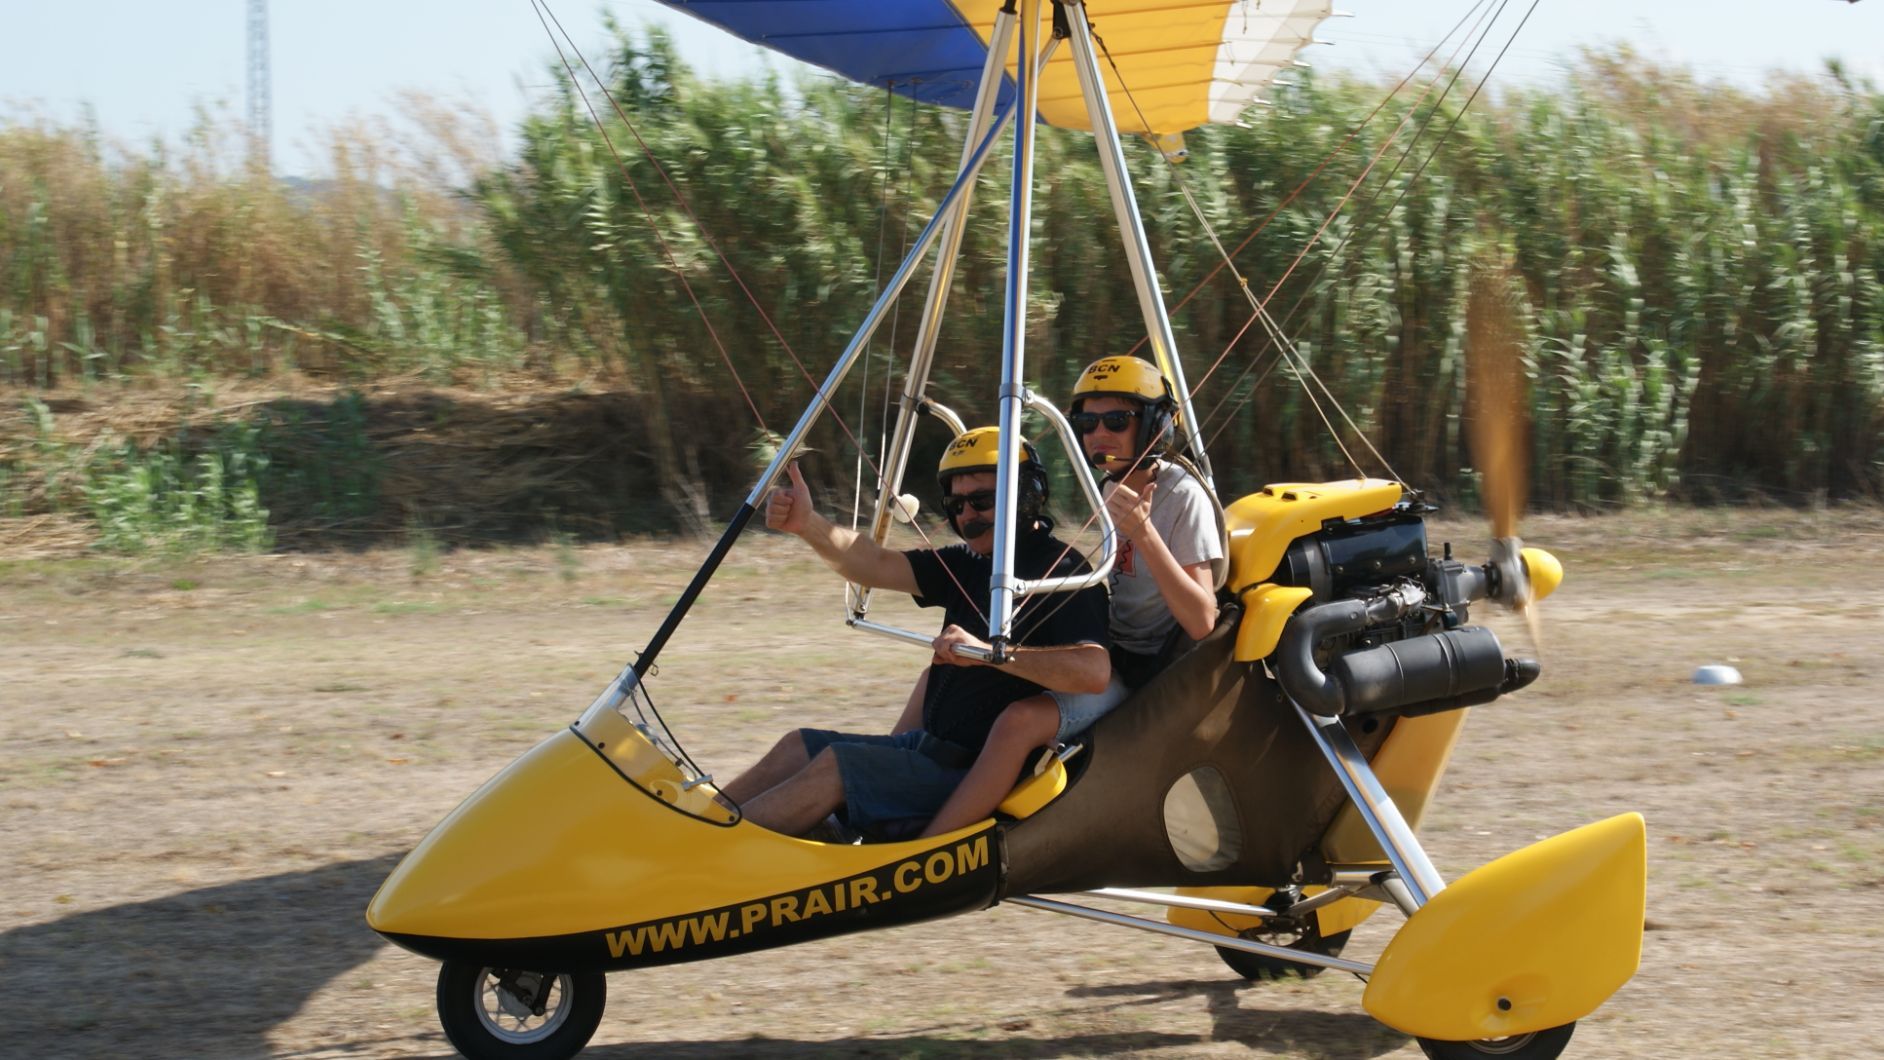 trike flight aerodrome palafolls